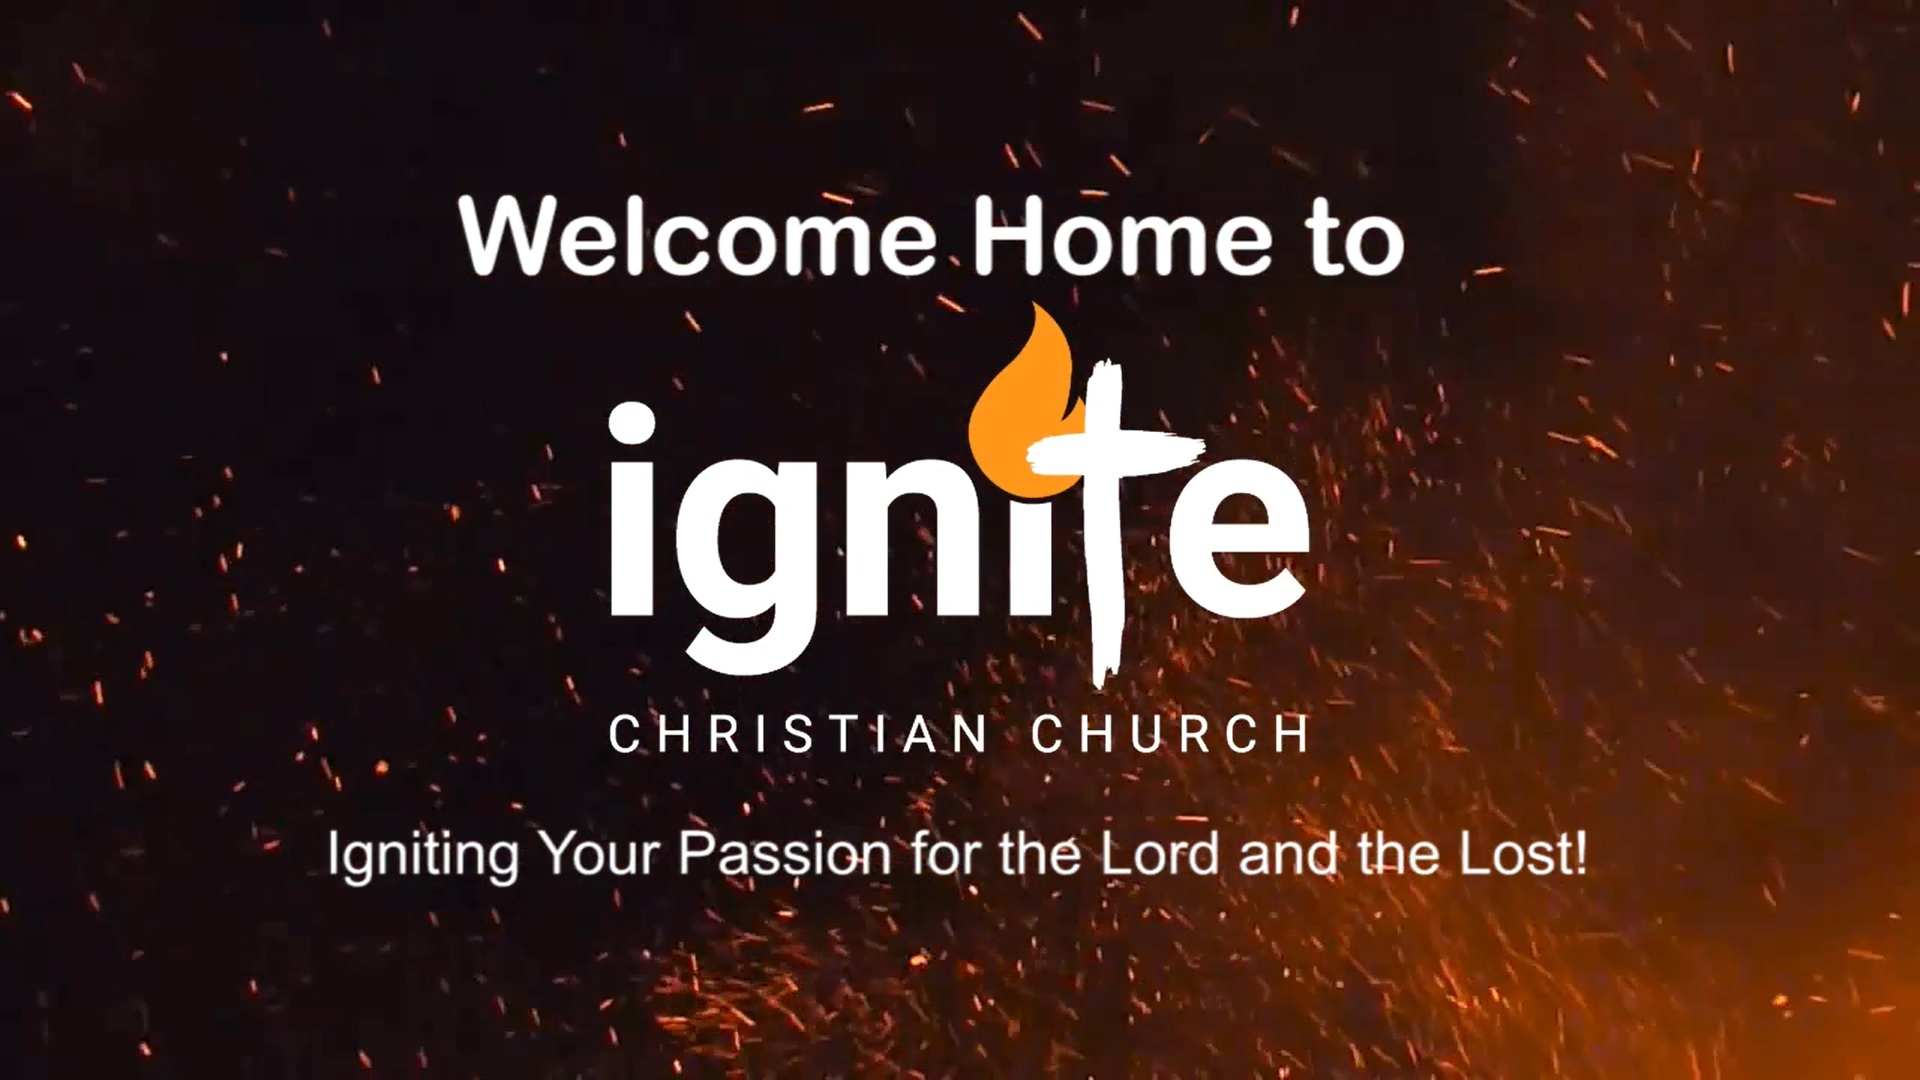 Ignite Christian Church... New Name, New Vision